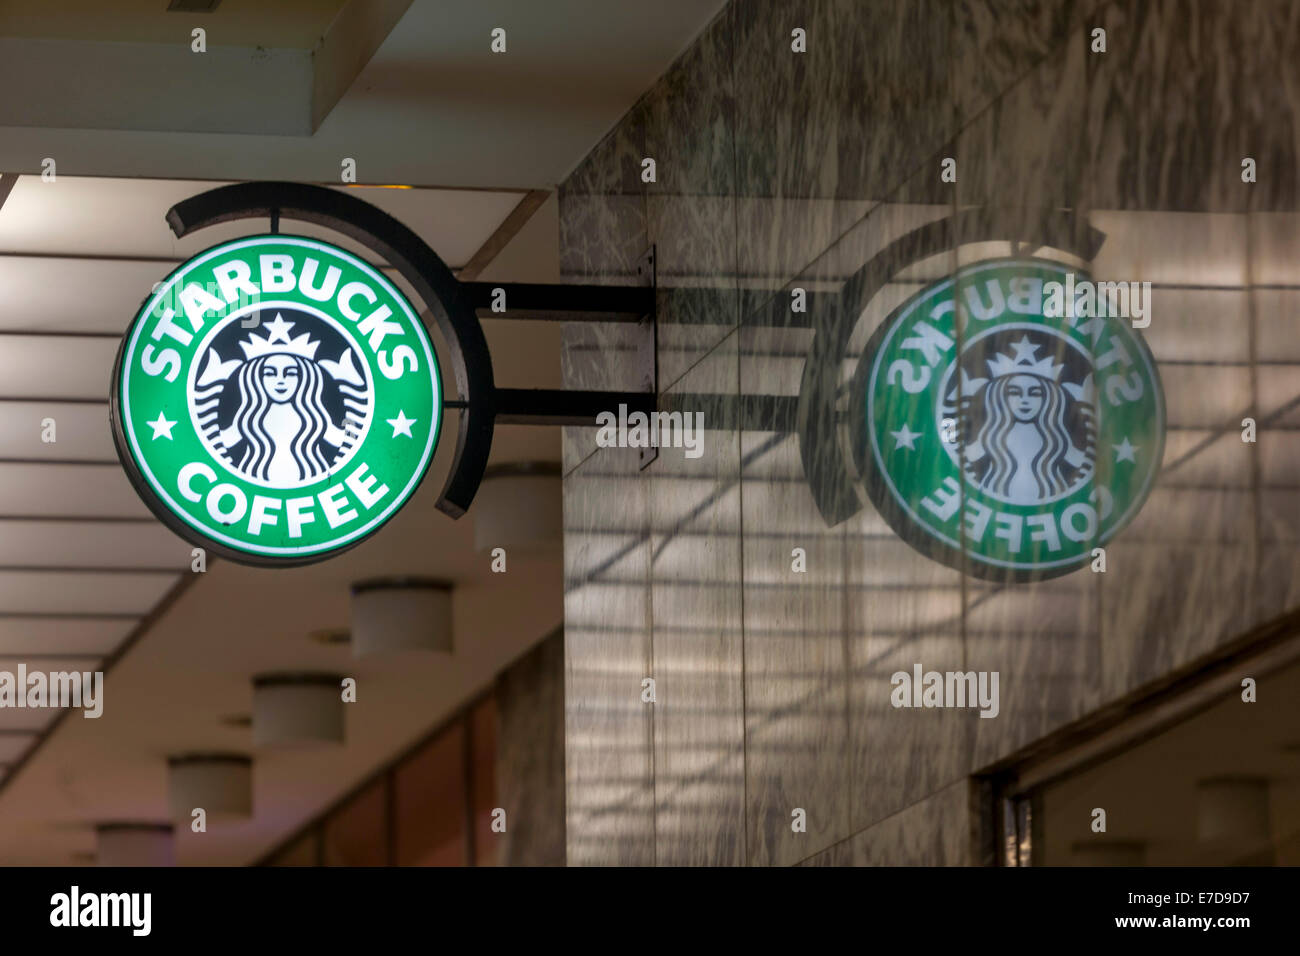 Starbucks Coffee sign Prague Czech Republic Stock Photo